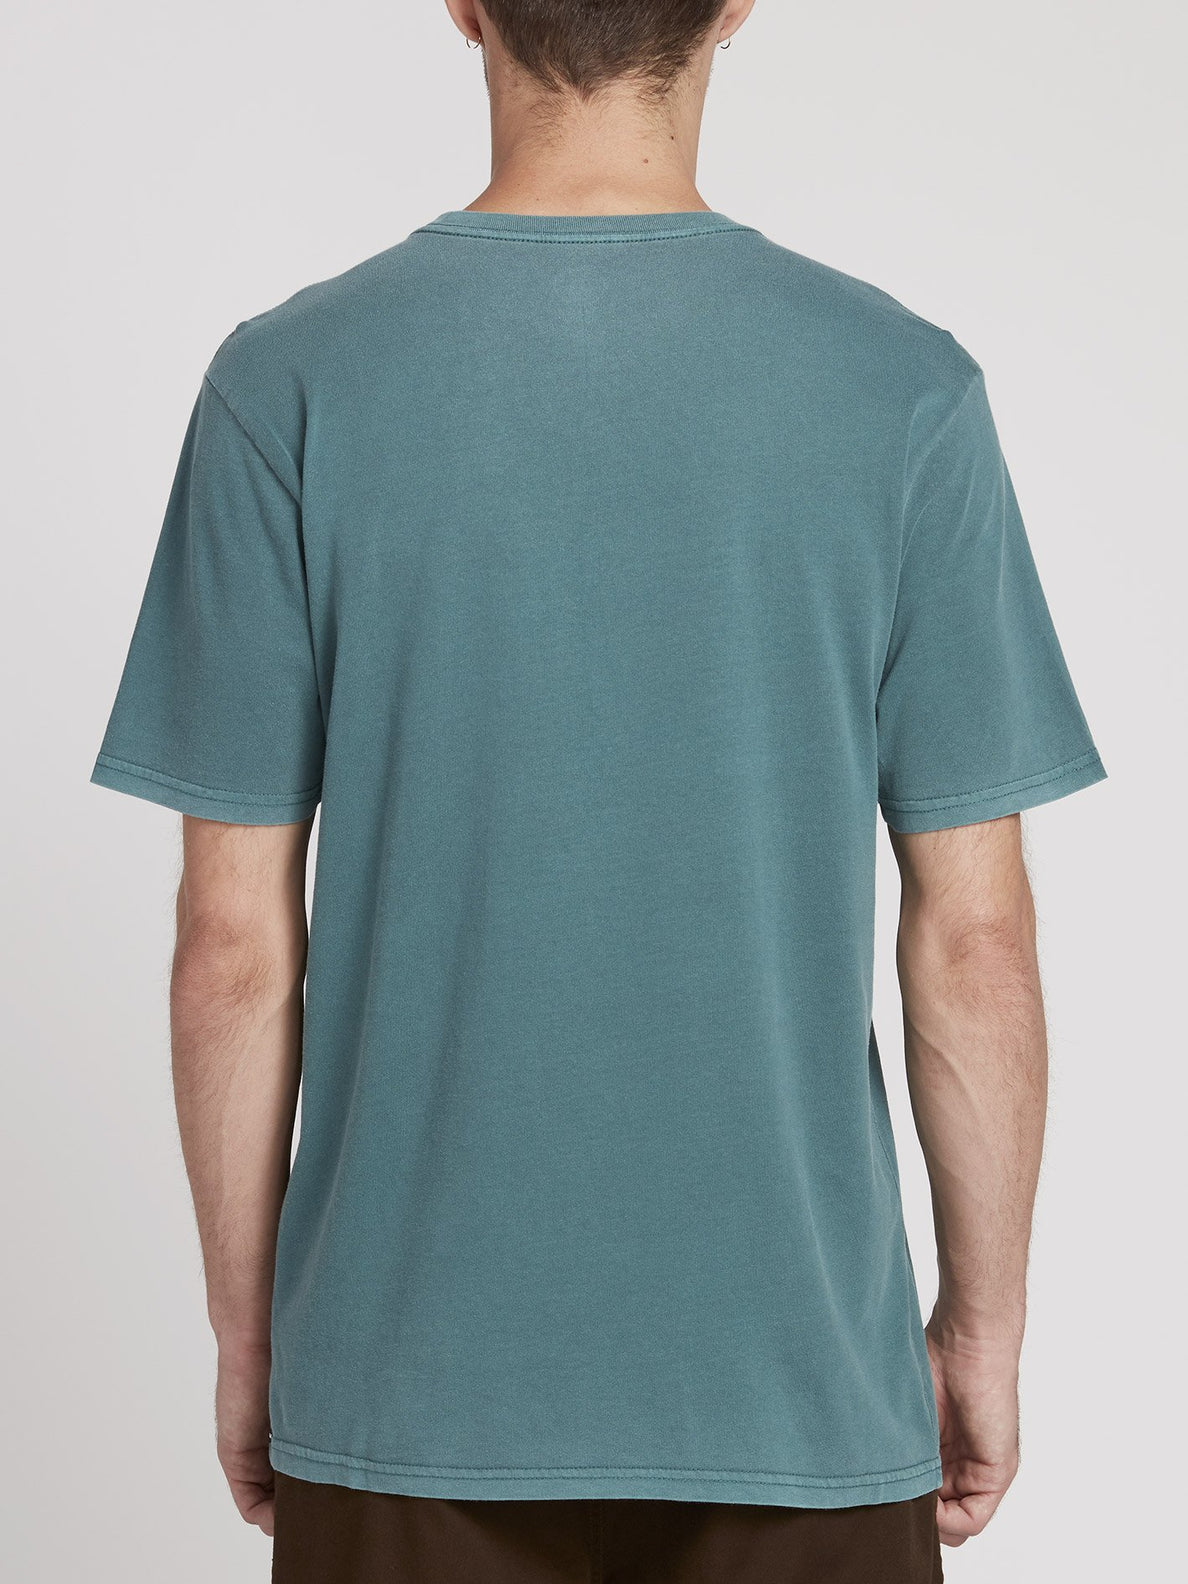 Solid Stone Emb T-shirt - Mediterranean (A5211906_MED) [B]